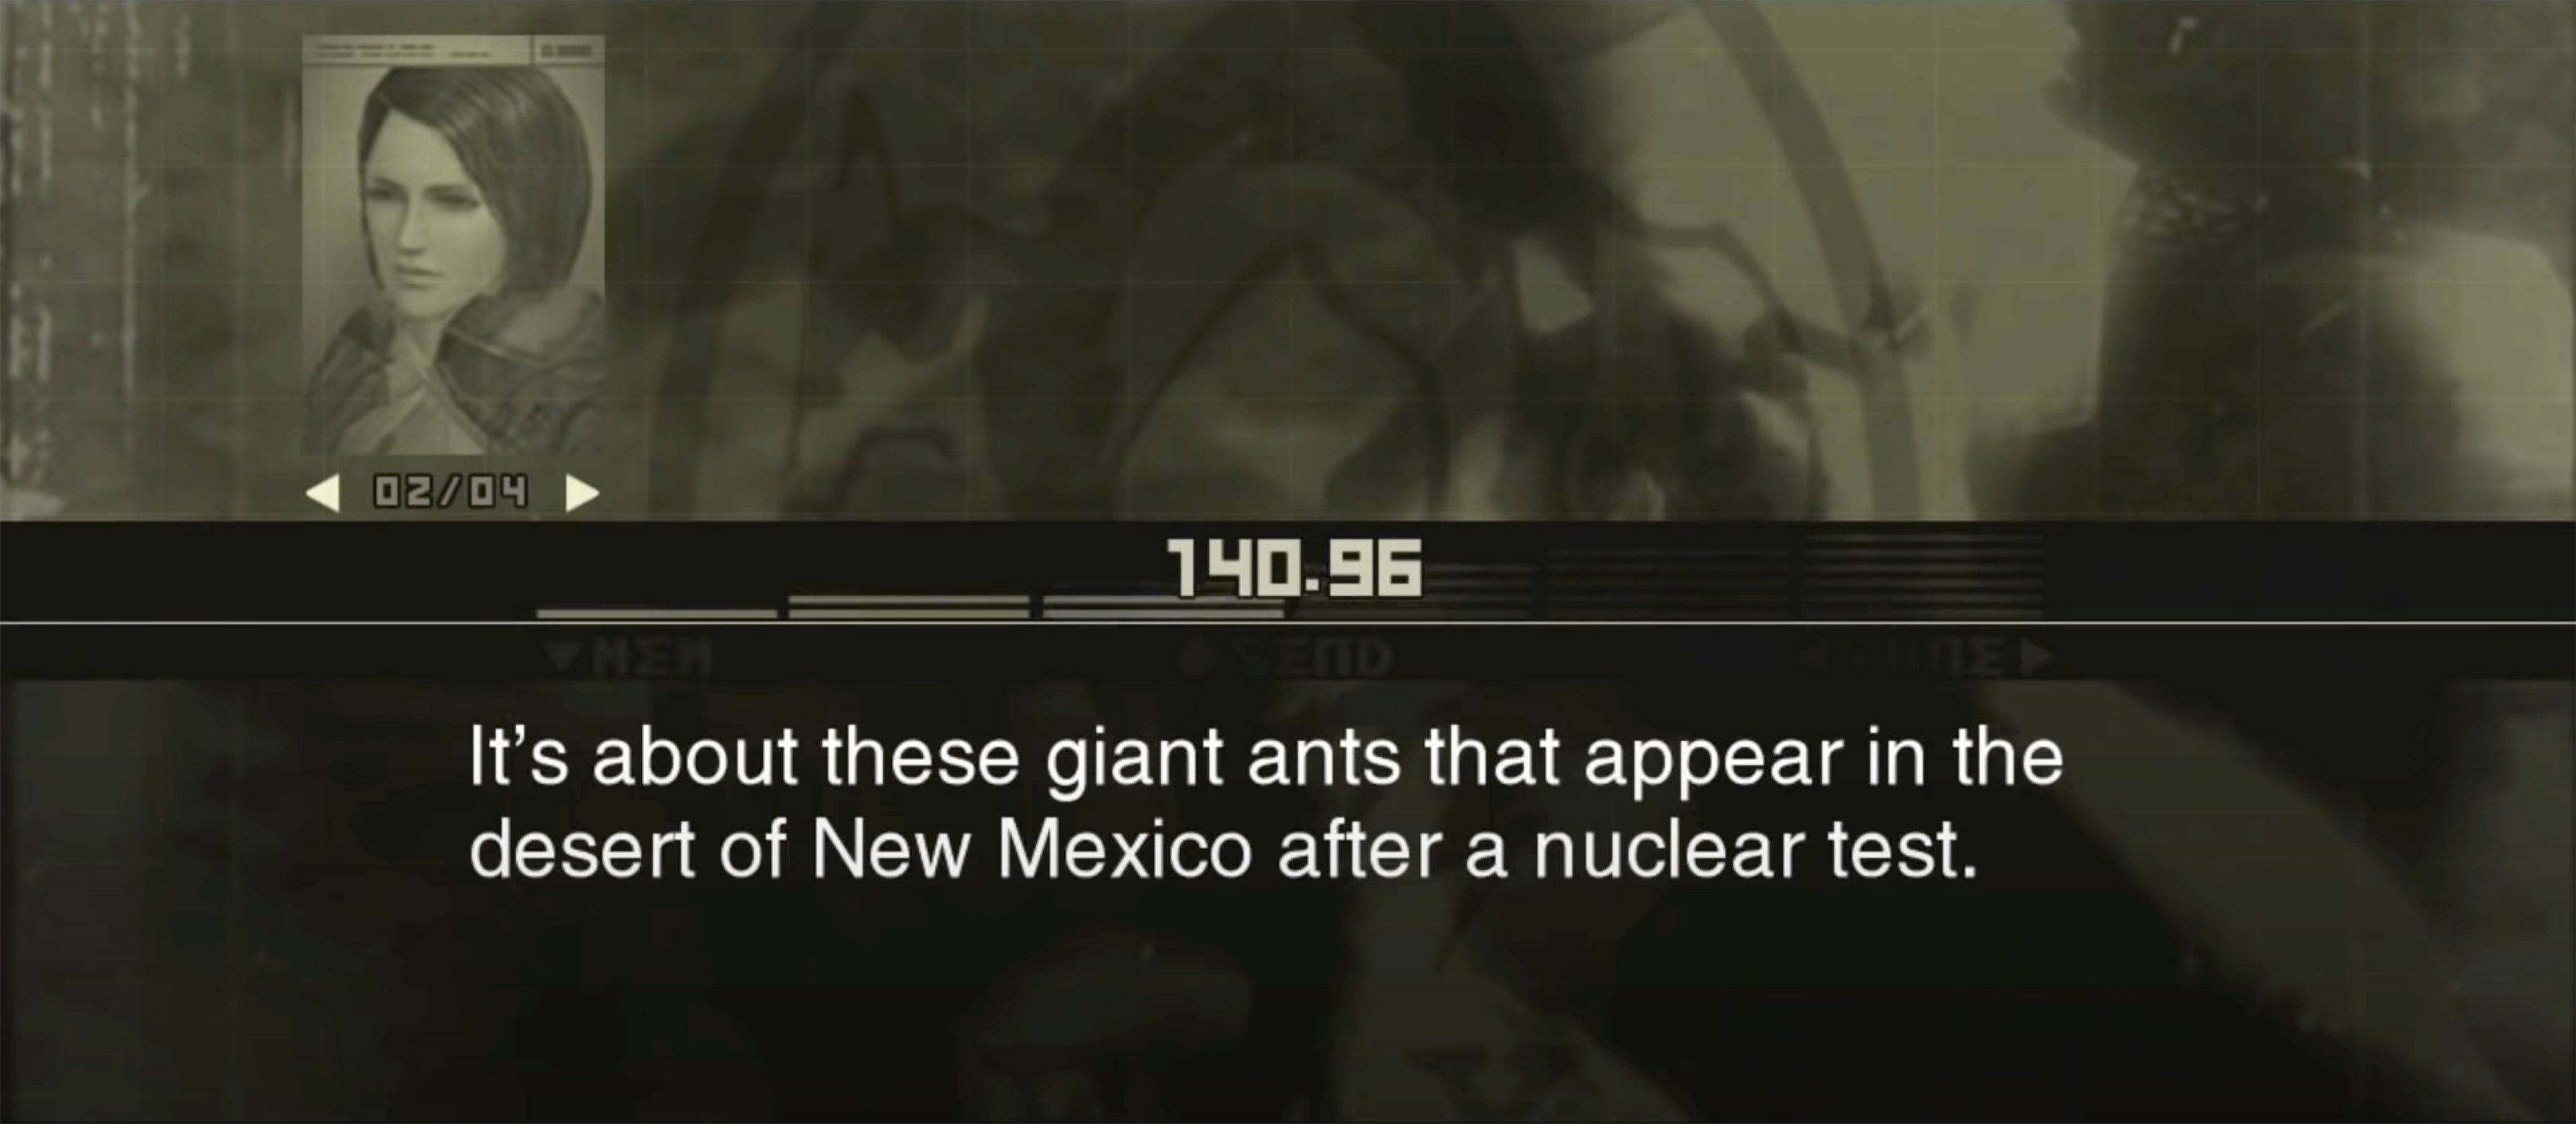 تماس با کدک با شخصیت پارامدیک در بازی Metal Gear Solid 3: Snake Eater